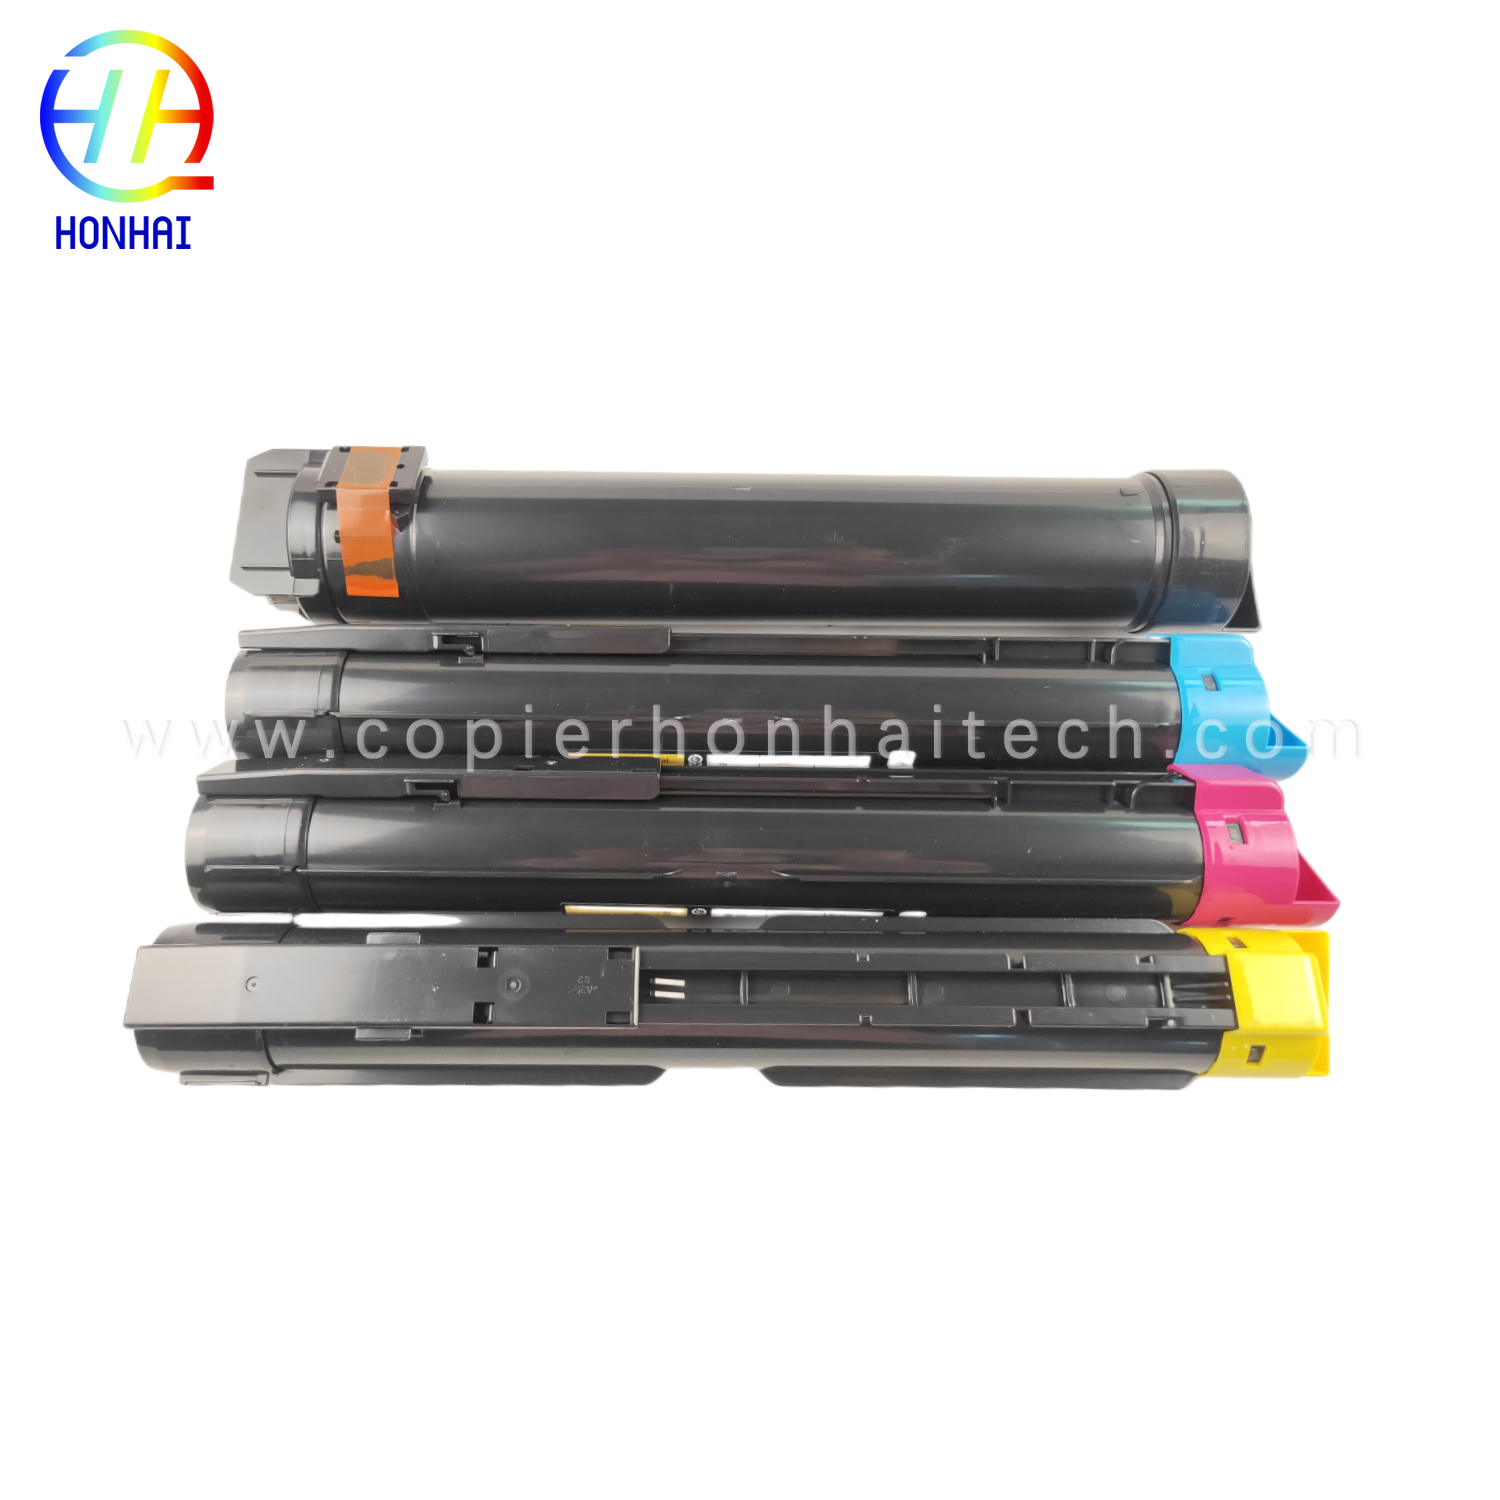 https://www.copierhonhaitech.com/zestaw kasety z tonerem-for-xerox-workcentre-7120-7125-006r01461-006r01462-006r01463-006r01464-product/